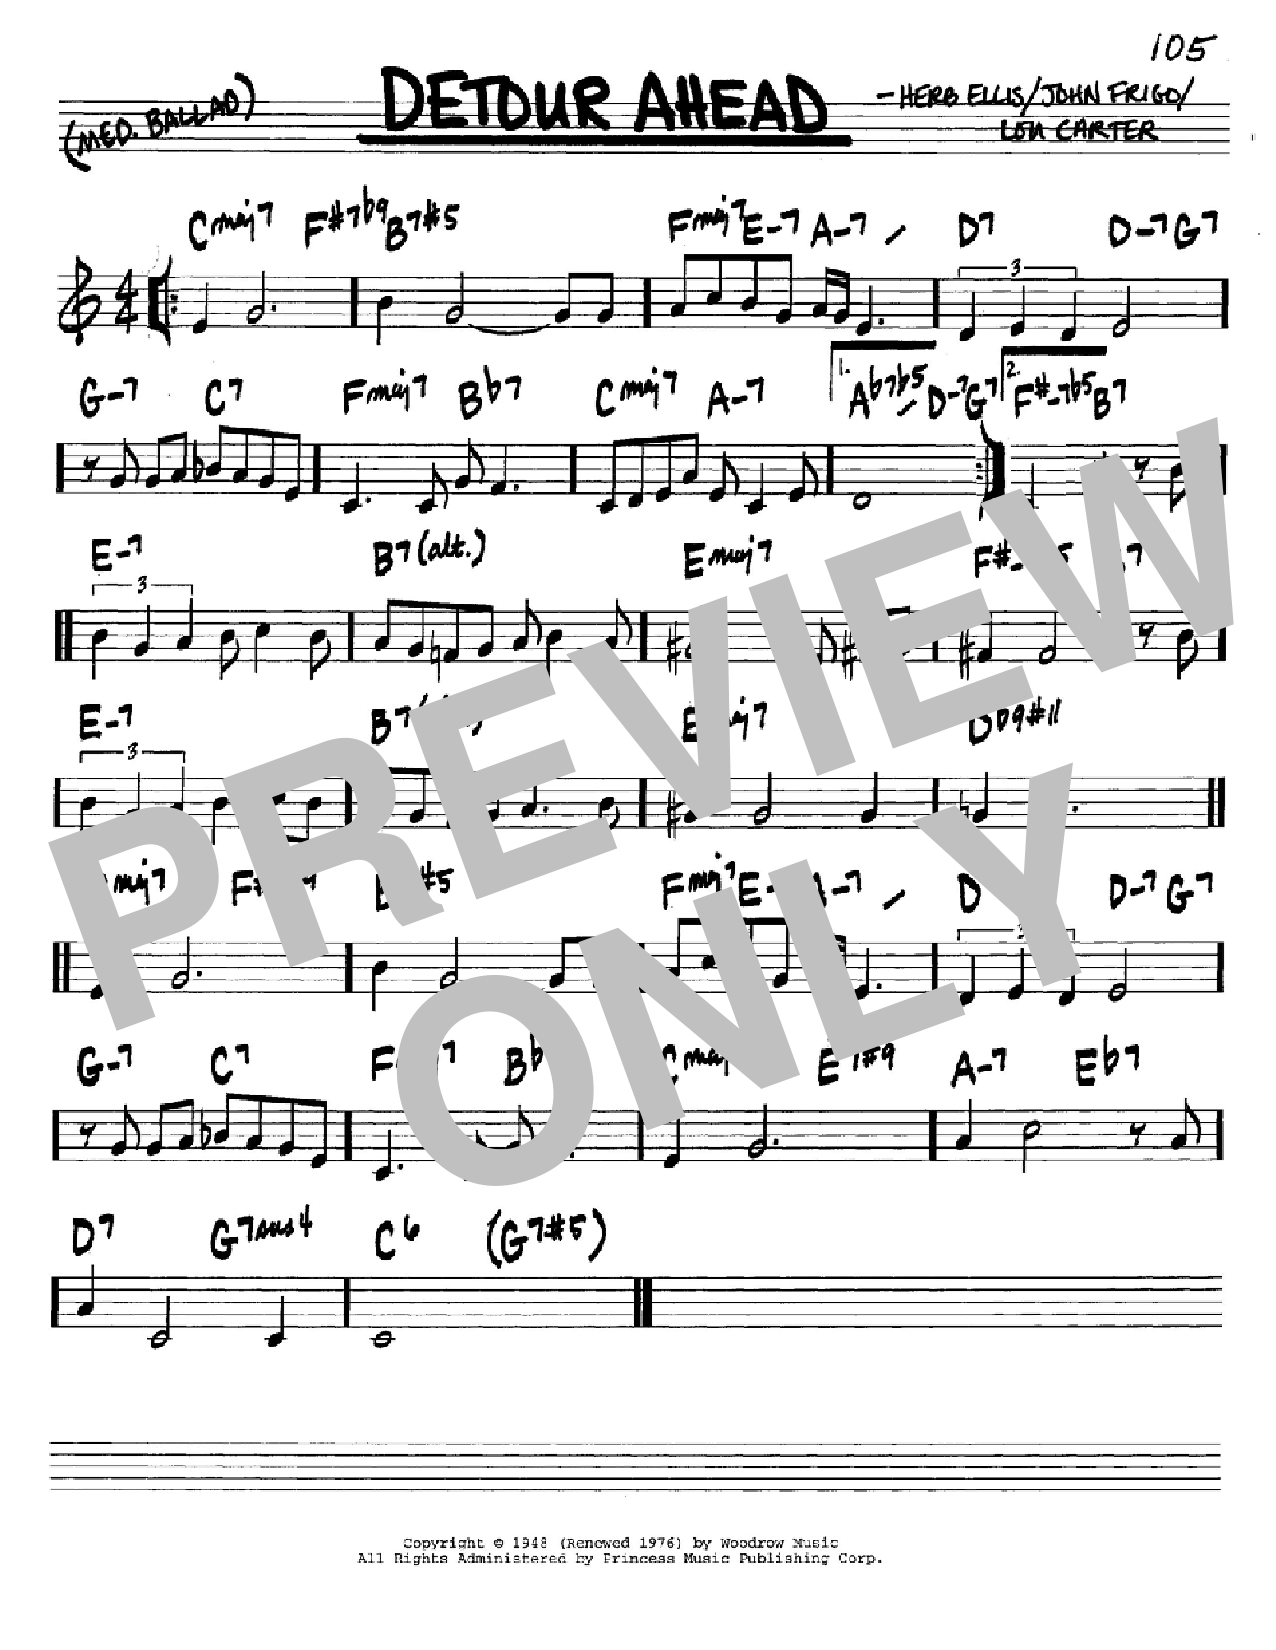 Herb Ellis Detour Ahead Sheet Music Notes & Chords for Real Book - Melody, Lyrics & Chords - C Instruments - Download or Print PDF